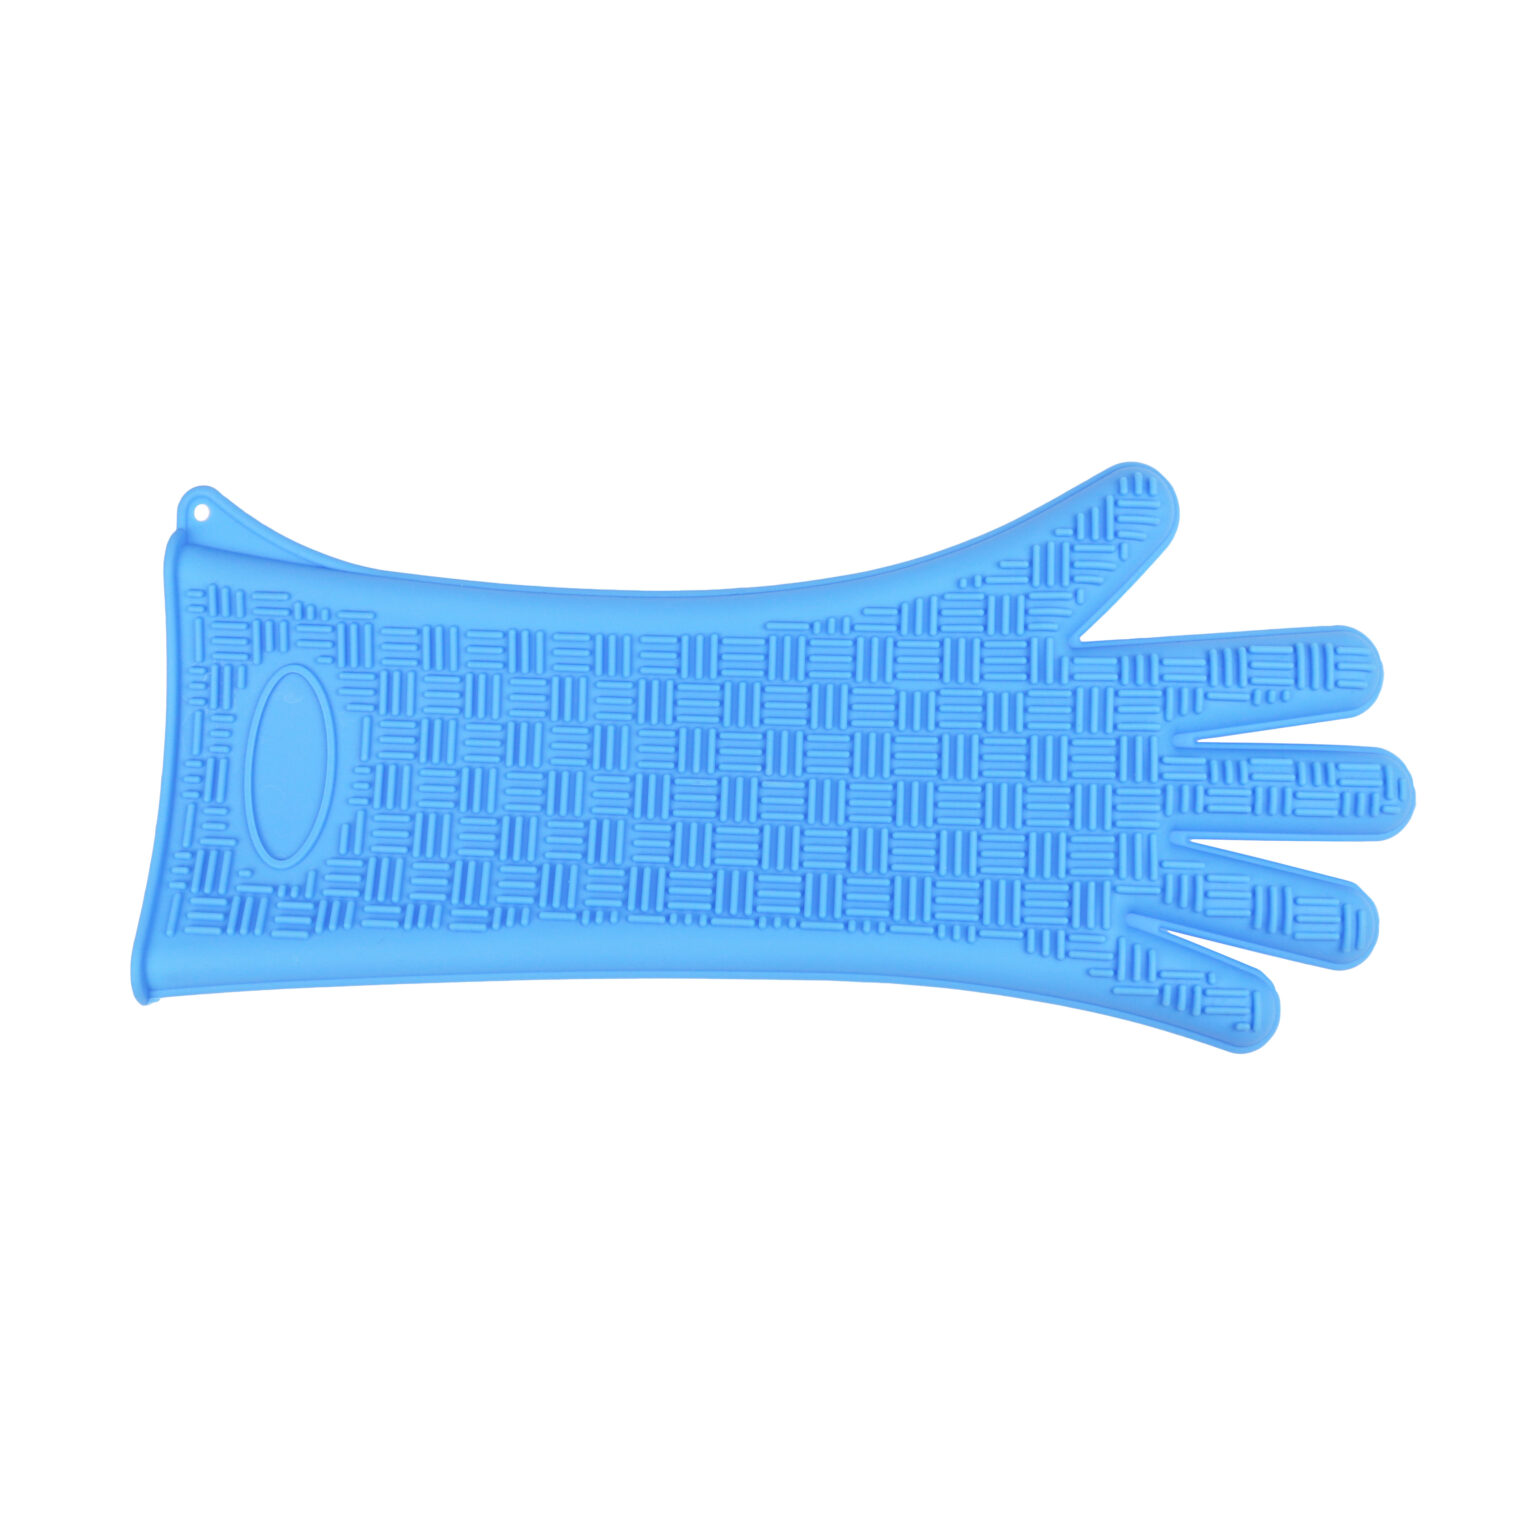 Instrument Care - Silicone Heat Glove - Healthmark Industries